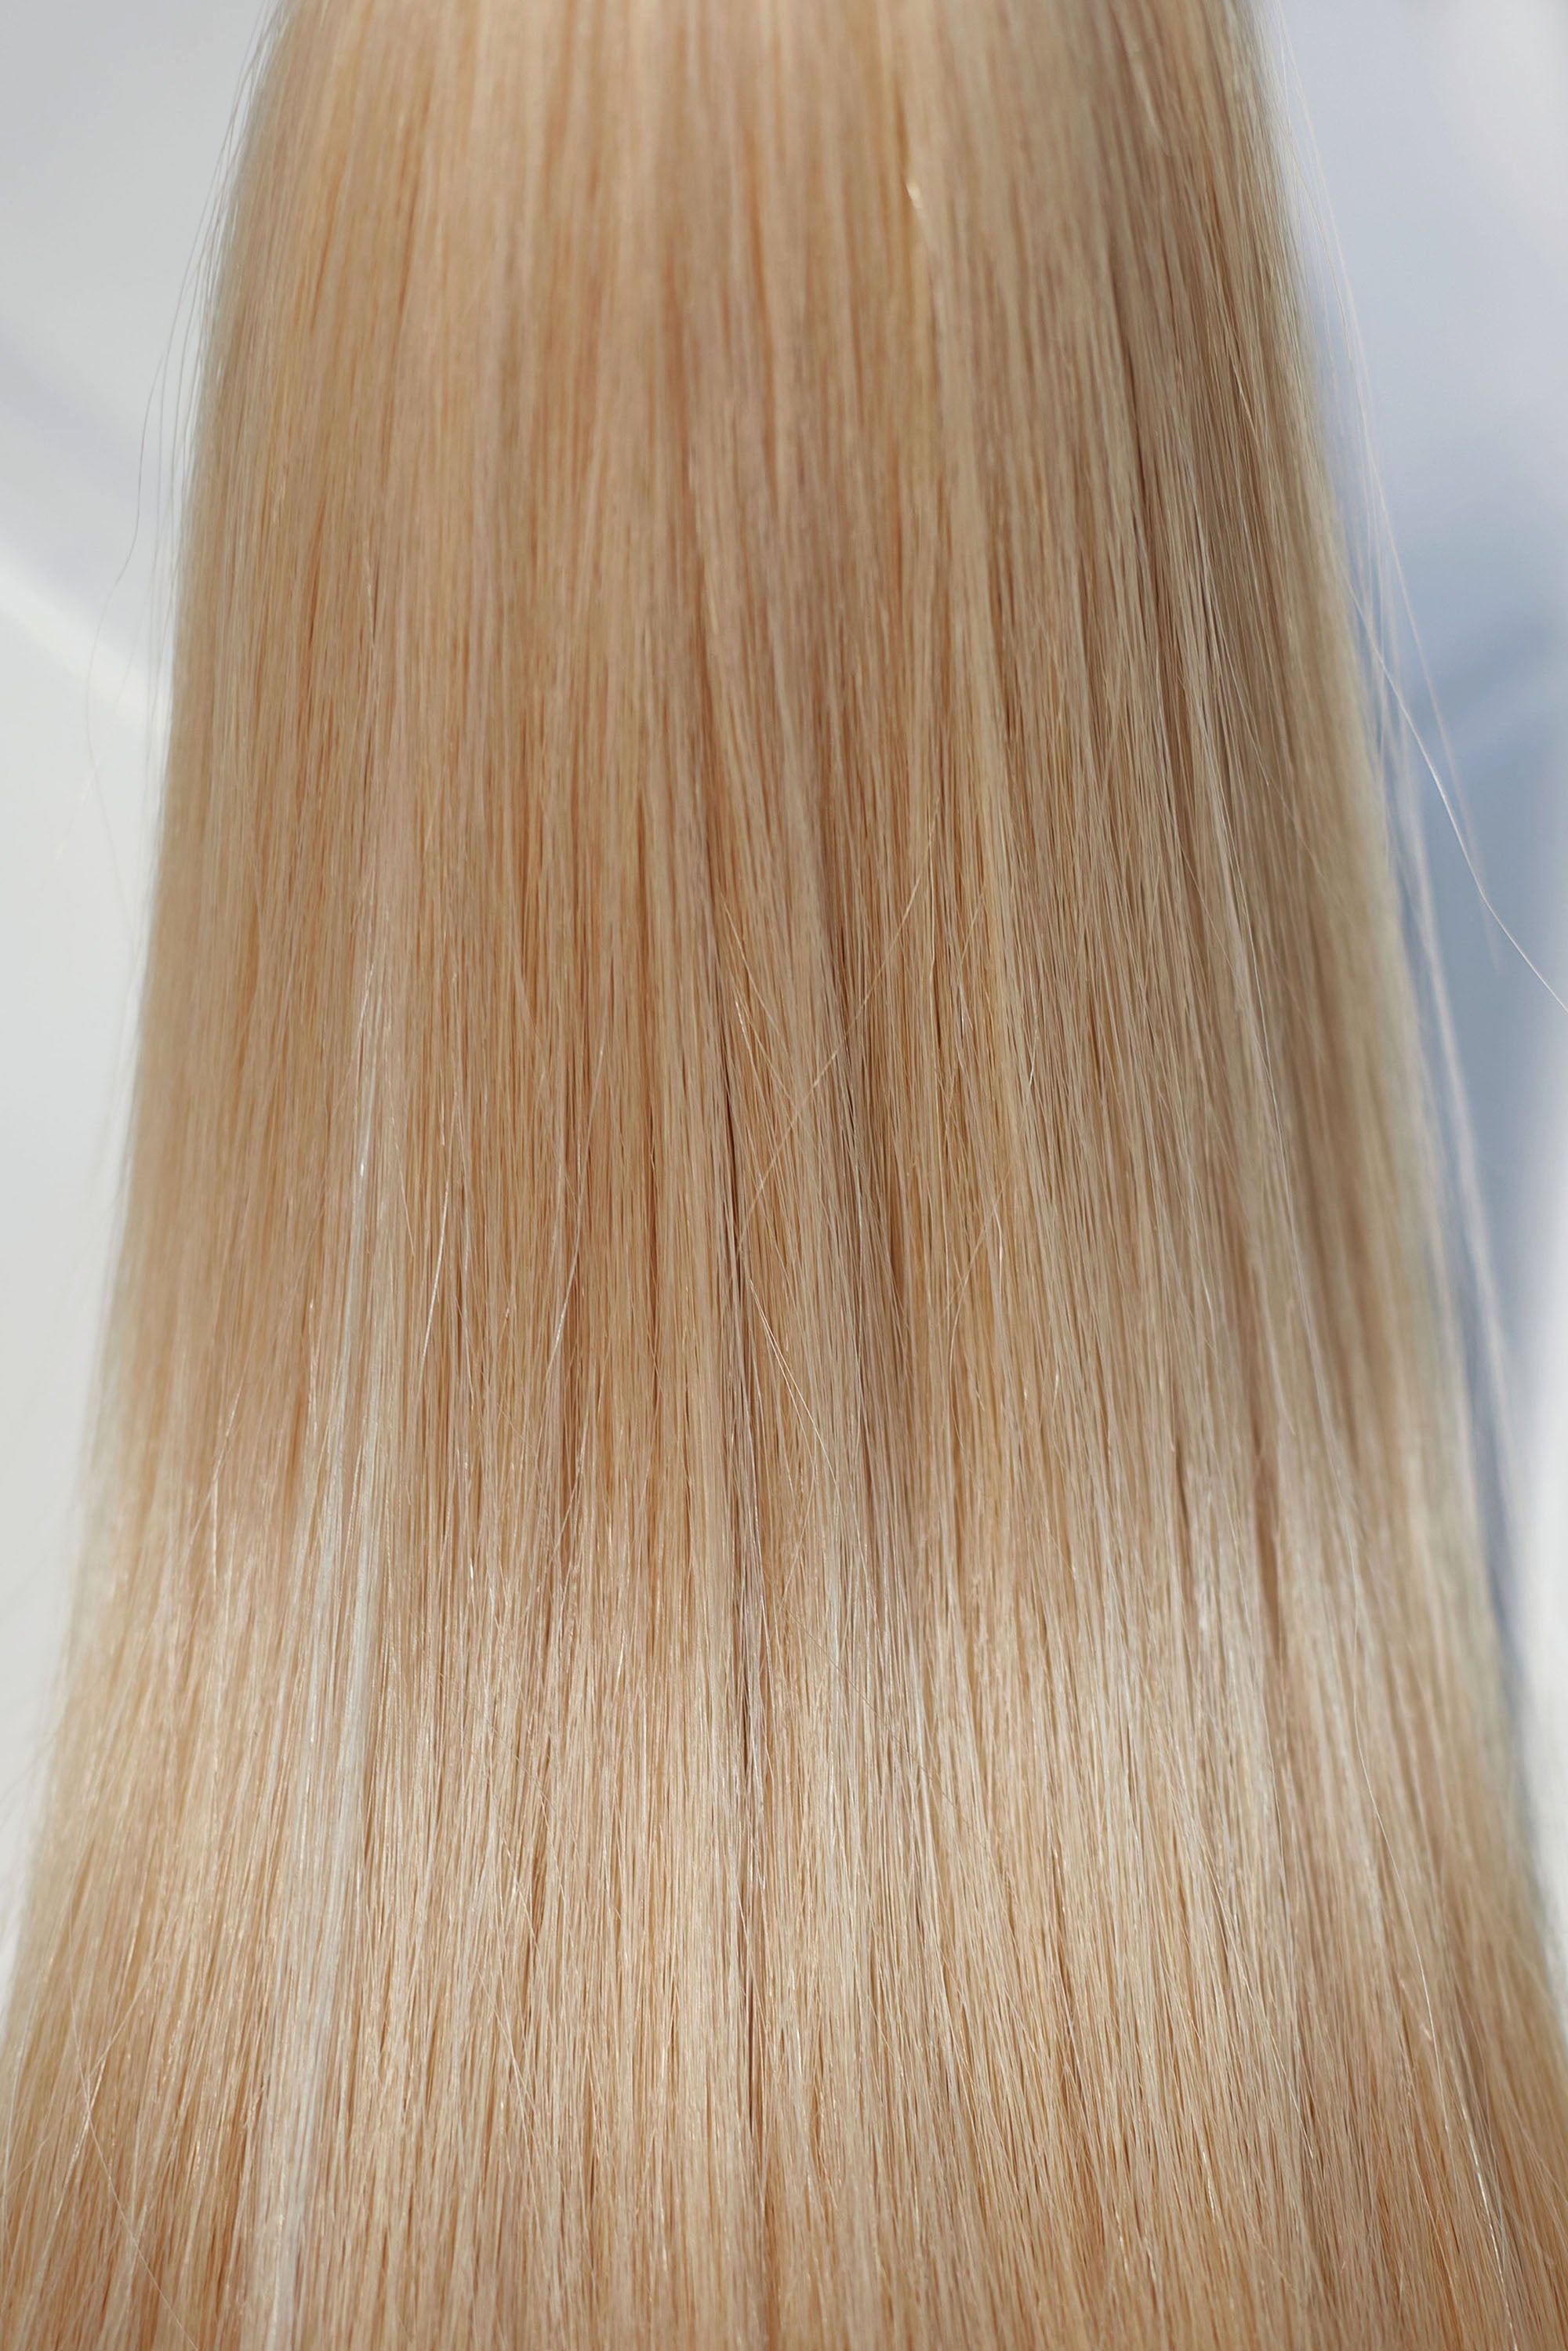 Behair professional Bulk hair "Premium" 16" (40cm) Natural Straight Light Gold Blond #24 - 25g hair extensions